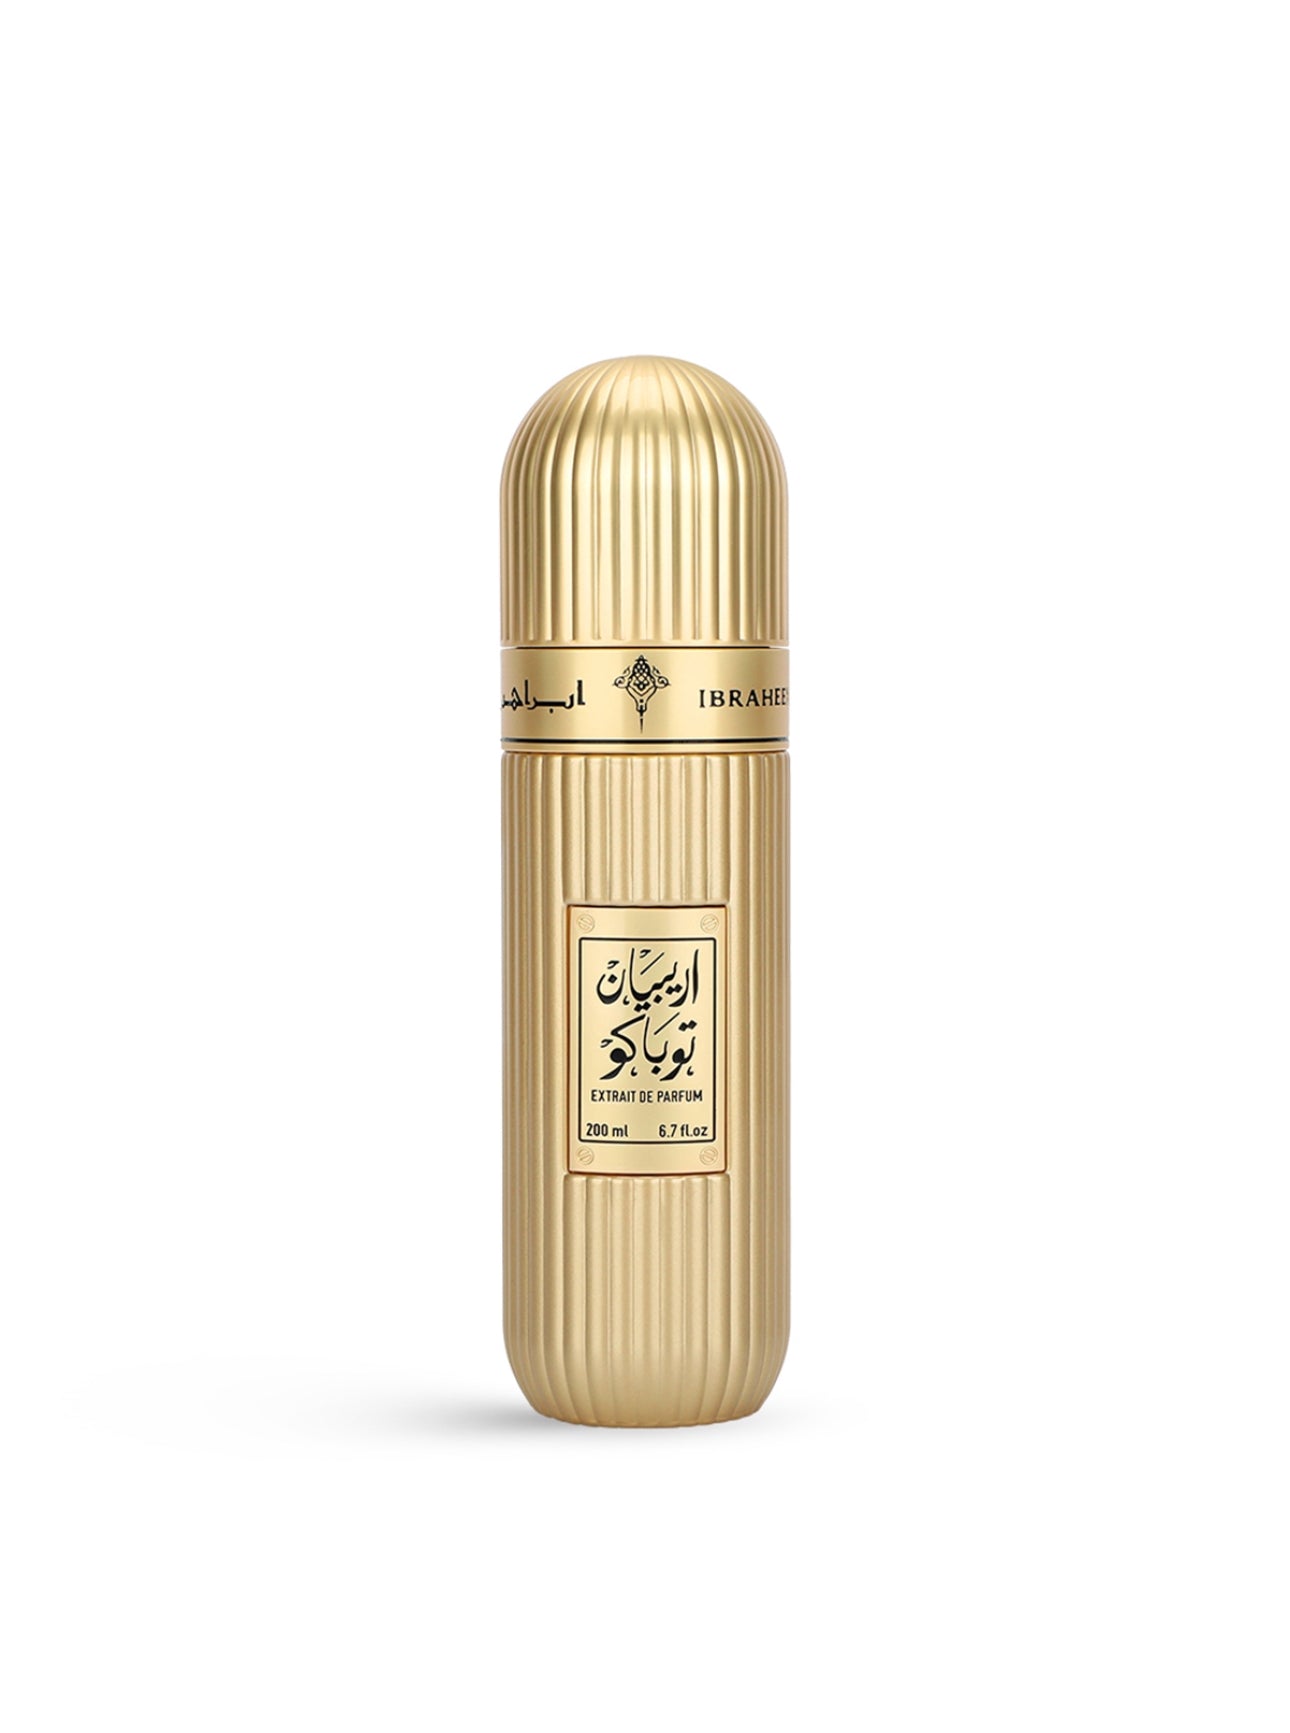 Arabian Tobacco Light Fragrance
- 200ml